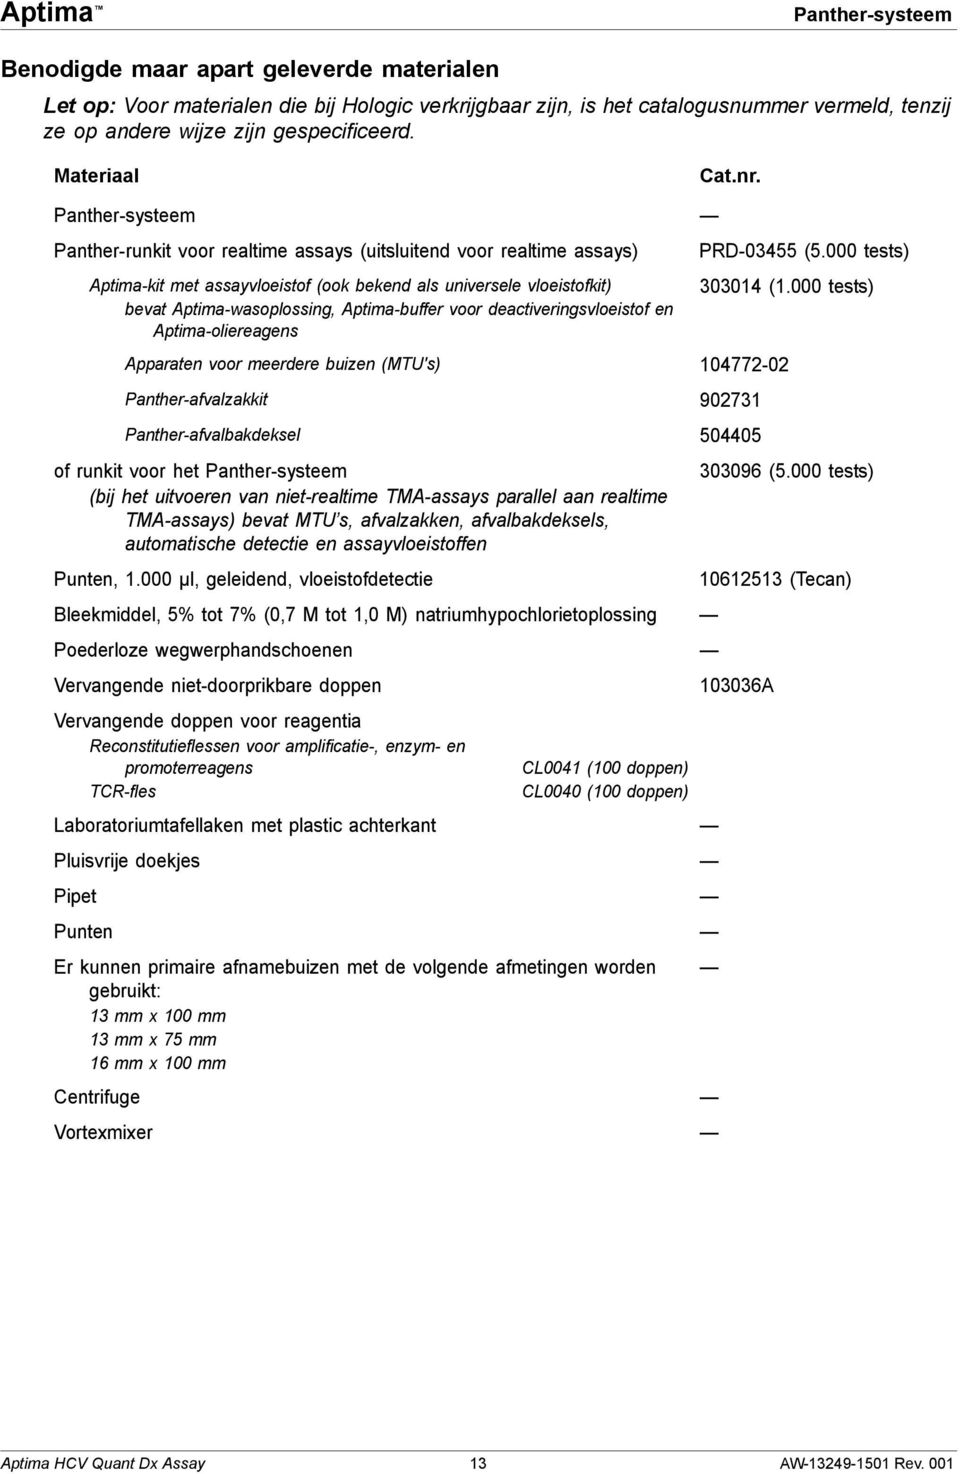 000 tests) Aptima-kit met assayvloeistof (ook bekend als universele vloeistofkit) bevat Aptima-wasoplossing, Aptima-buffer voor deactiveringsvloeistof en Aptima-oliereagens 303014 (1.